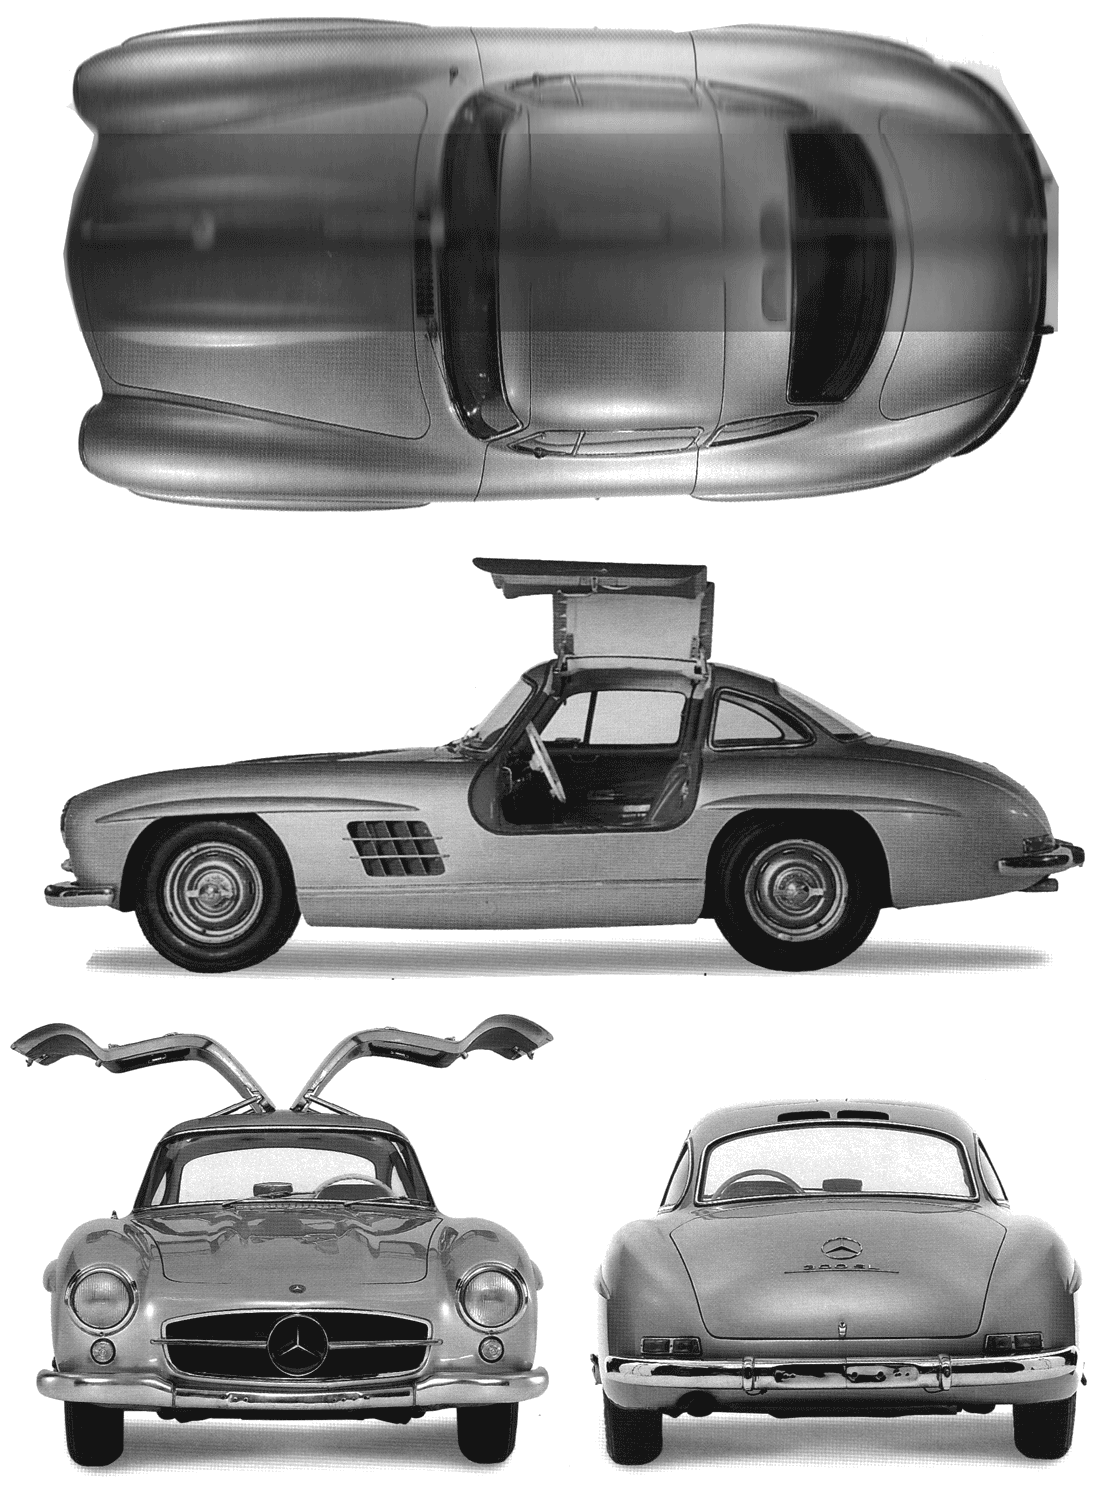 1955 Mercedes-Benz SL-class W194 300SL Coupe v2 blueprints free - Outlines